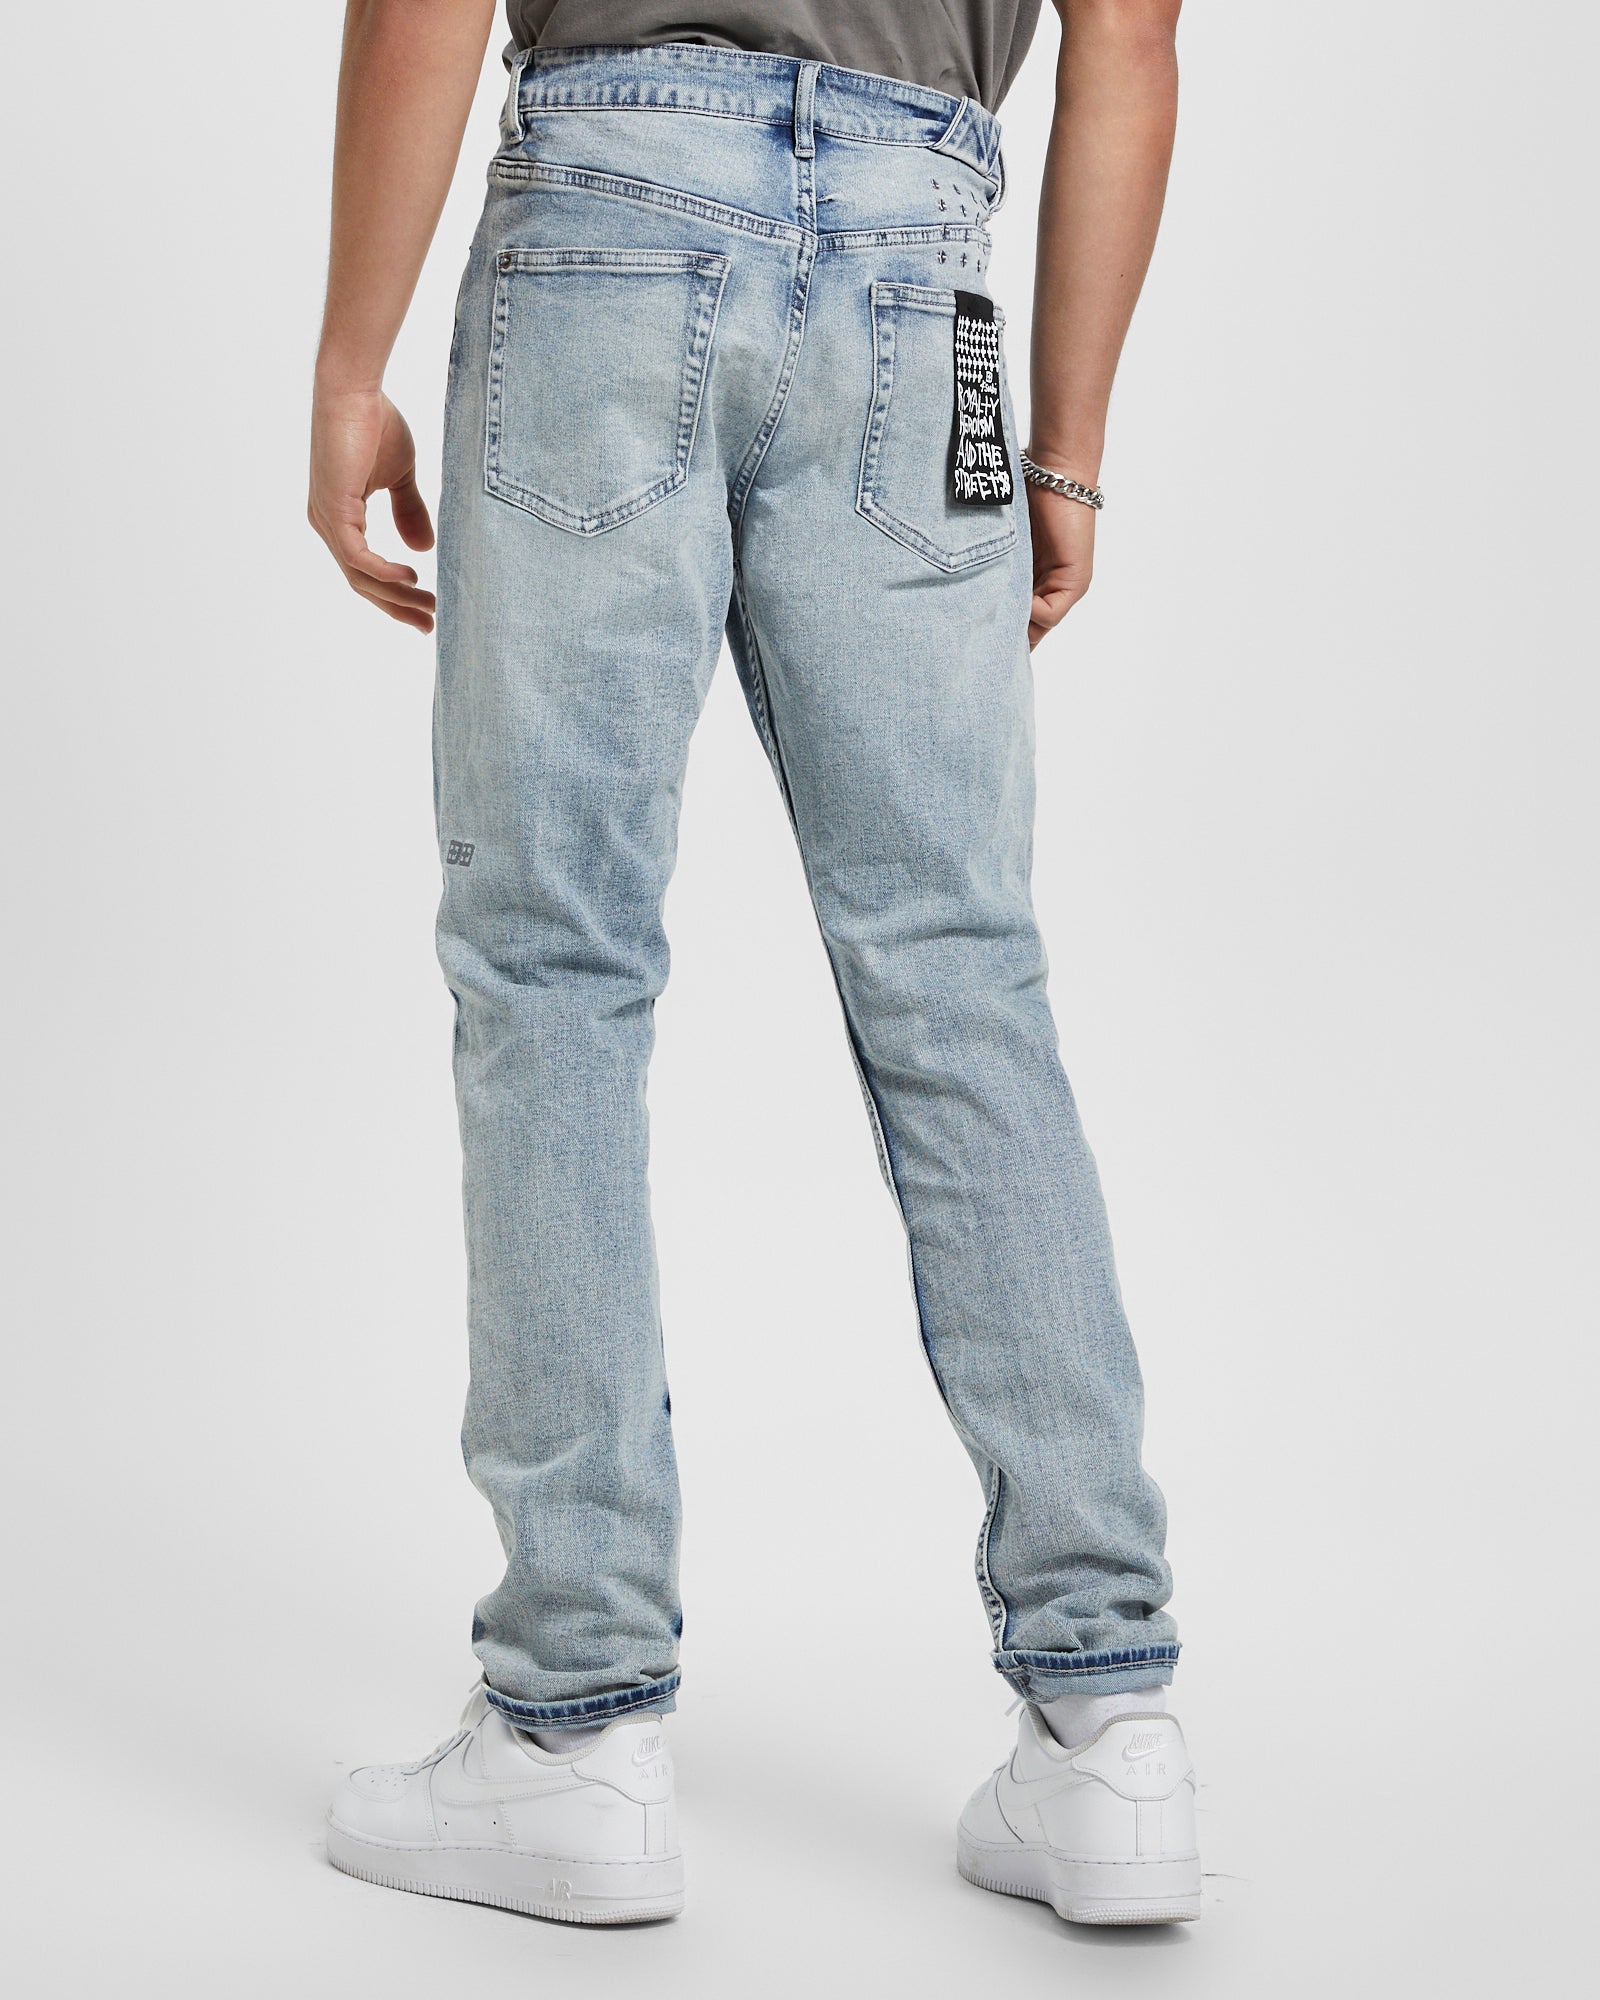 Ksubi Jeans men's size 31 Great condition, only - Depop